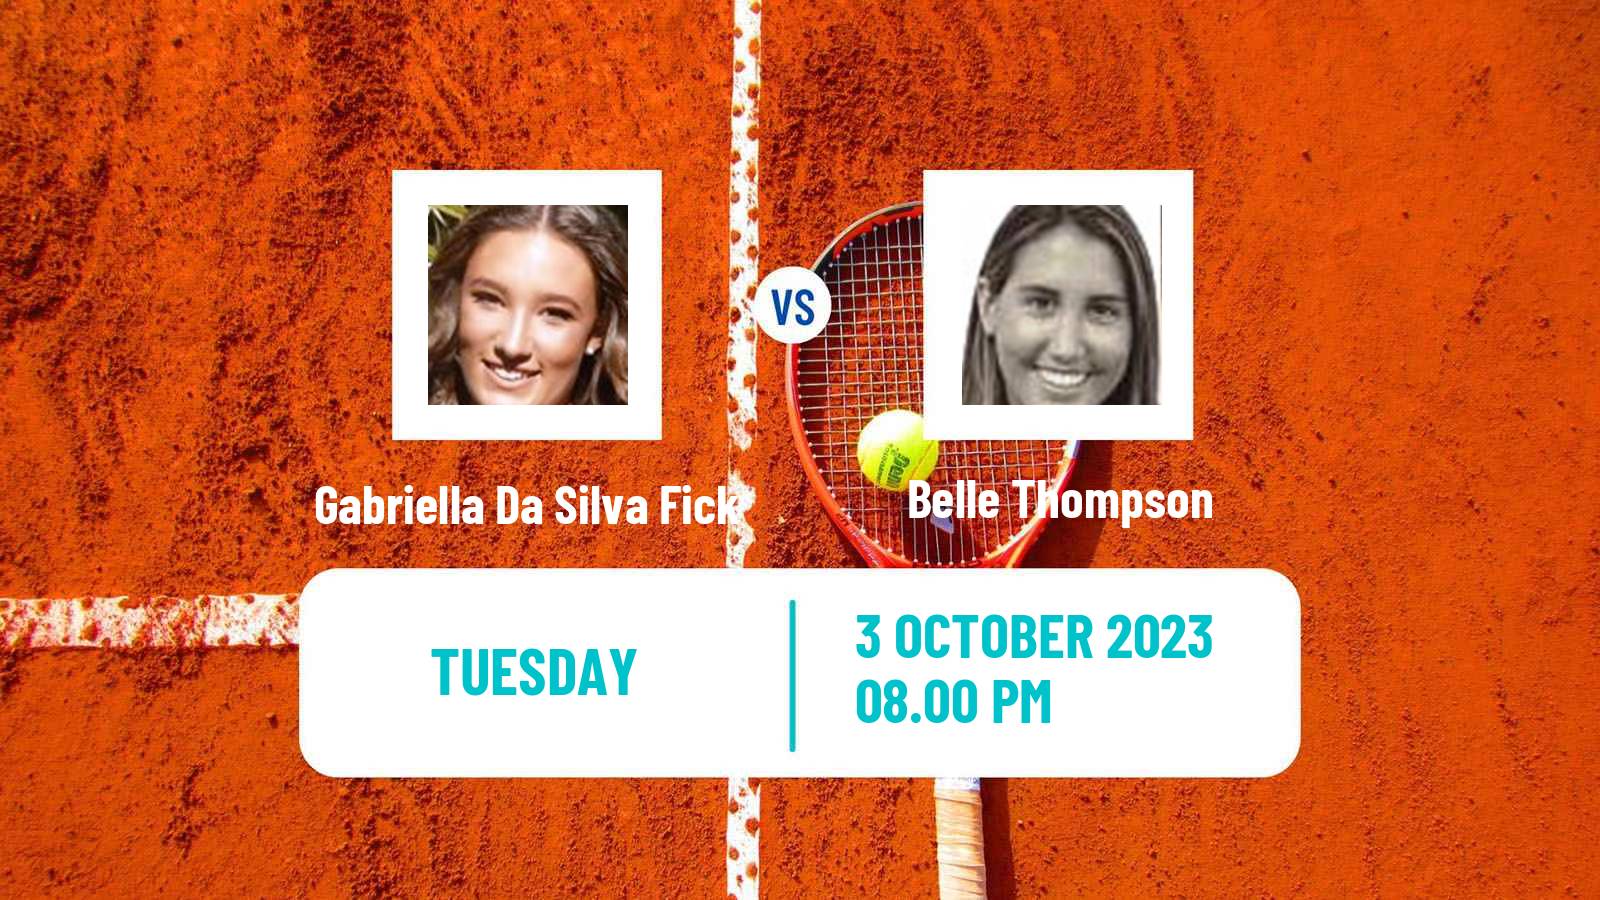 Tennis ITF W25 Cairns Women Gabriella Da Silva Fick - Belle Thompson